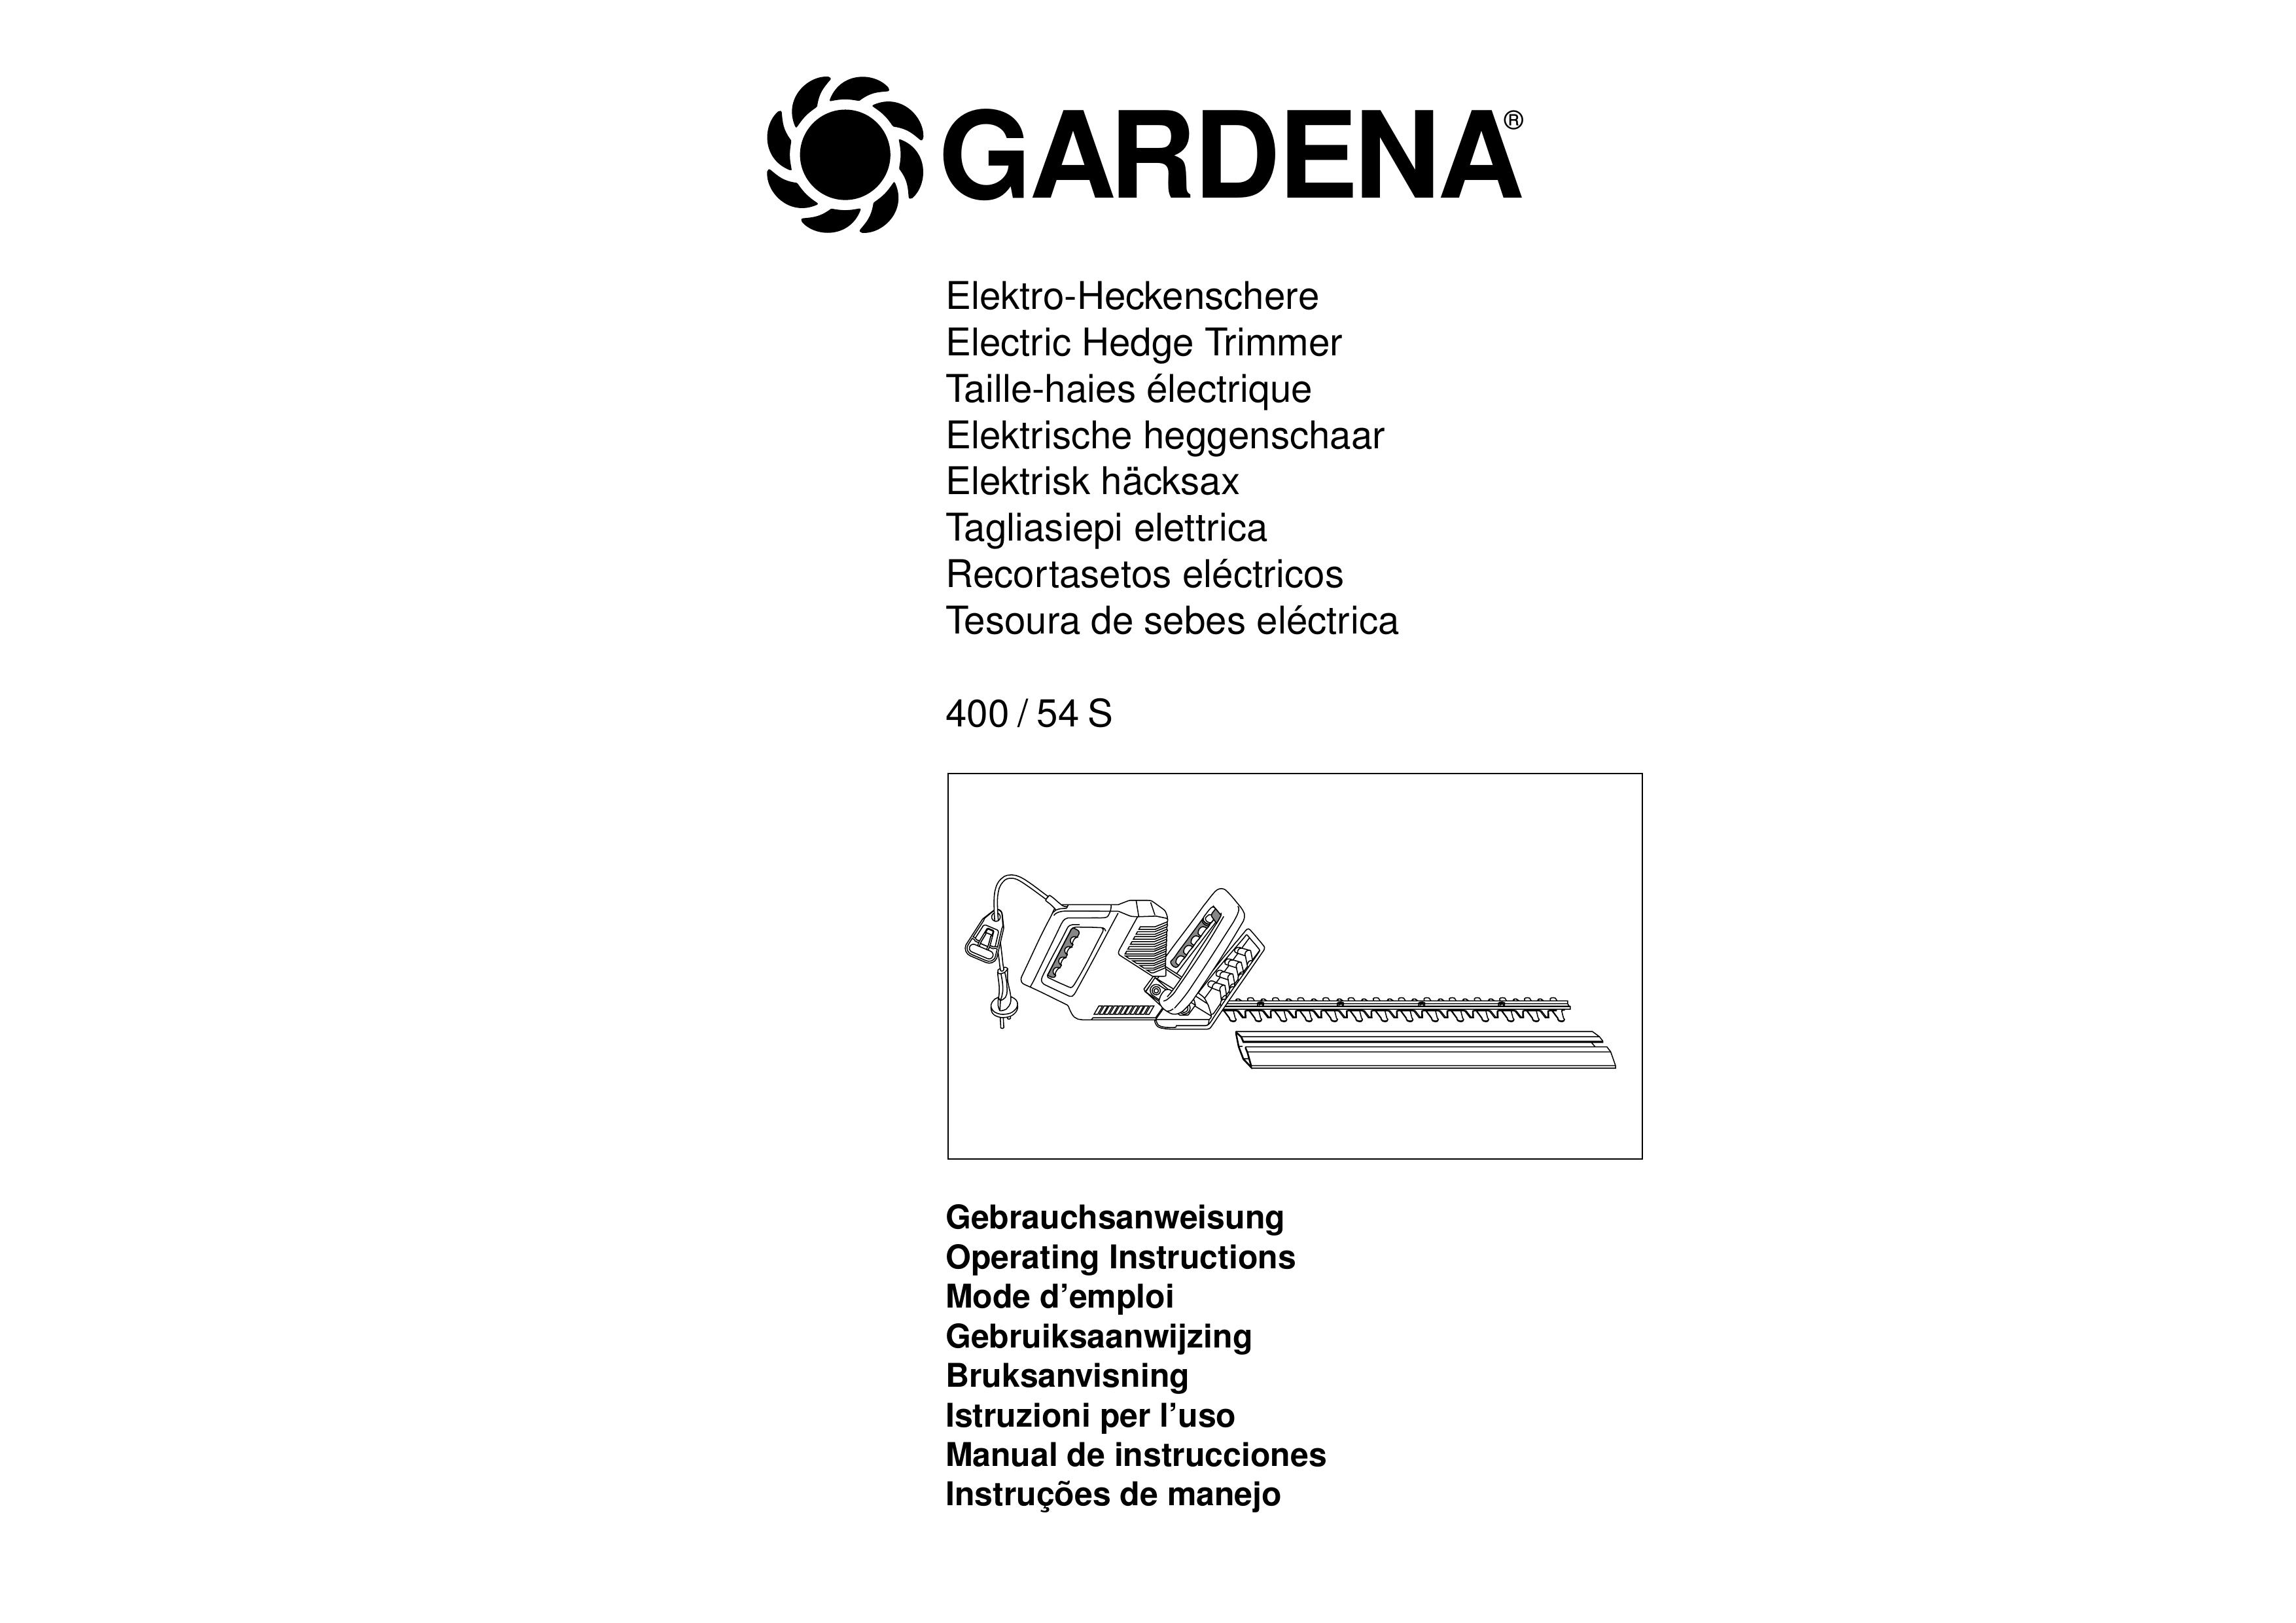 Gardena 400/54S Trimmer User Manual